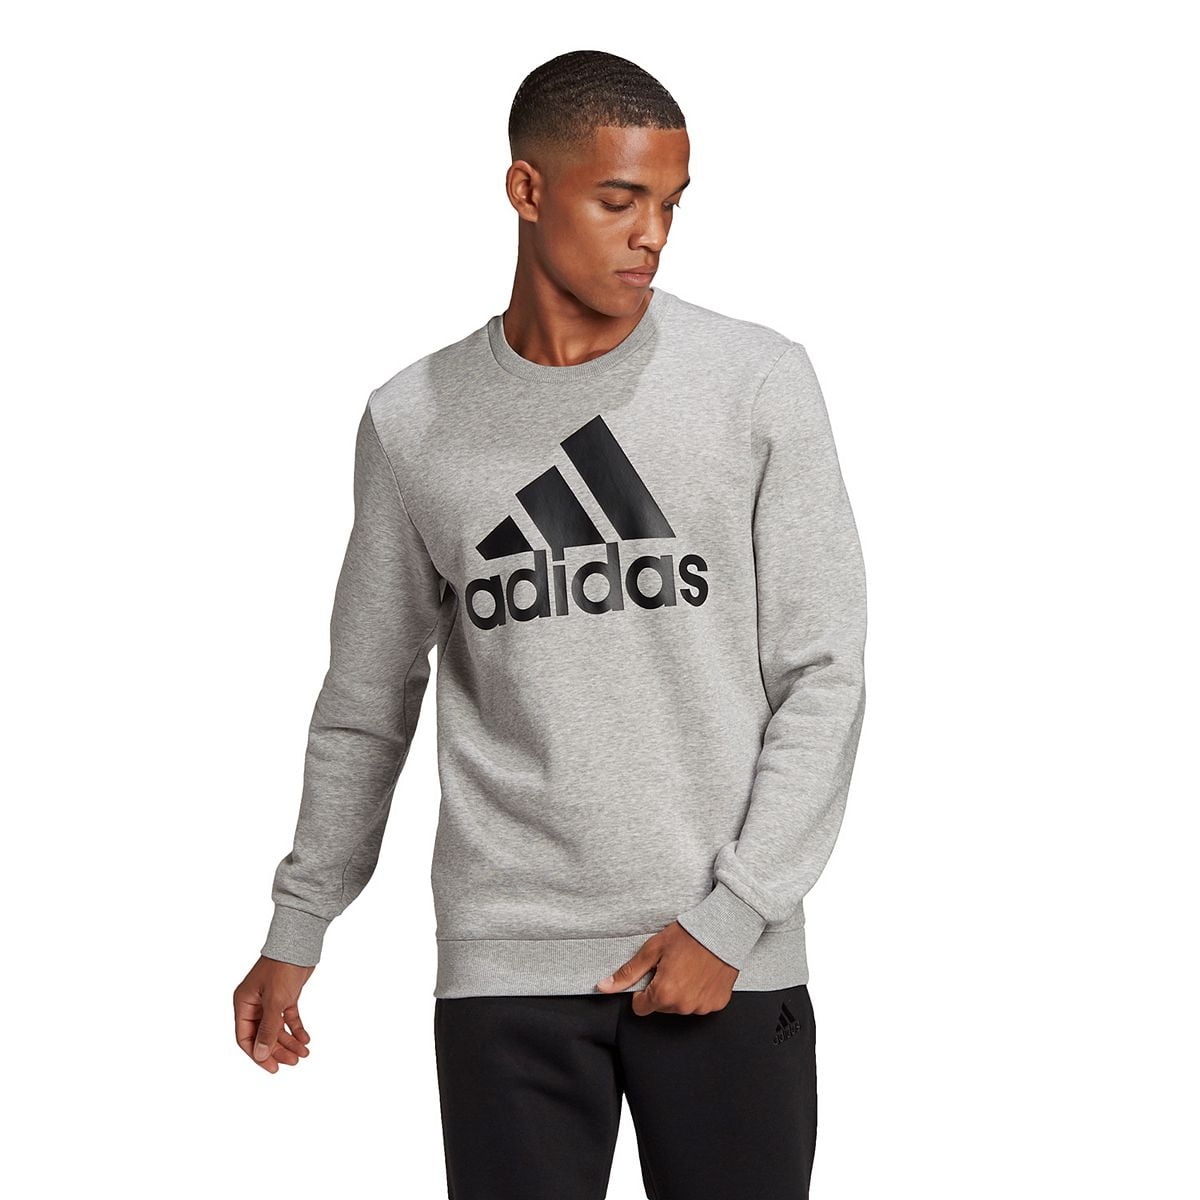 Adidas Men's Fleece Sweatshirt, Medium Grey Heather/Black, XX-Large